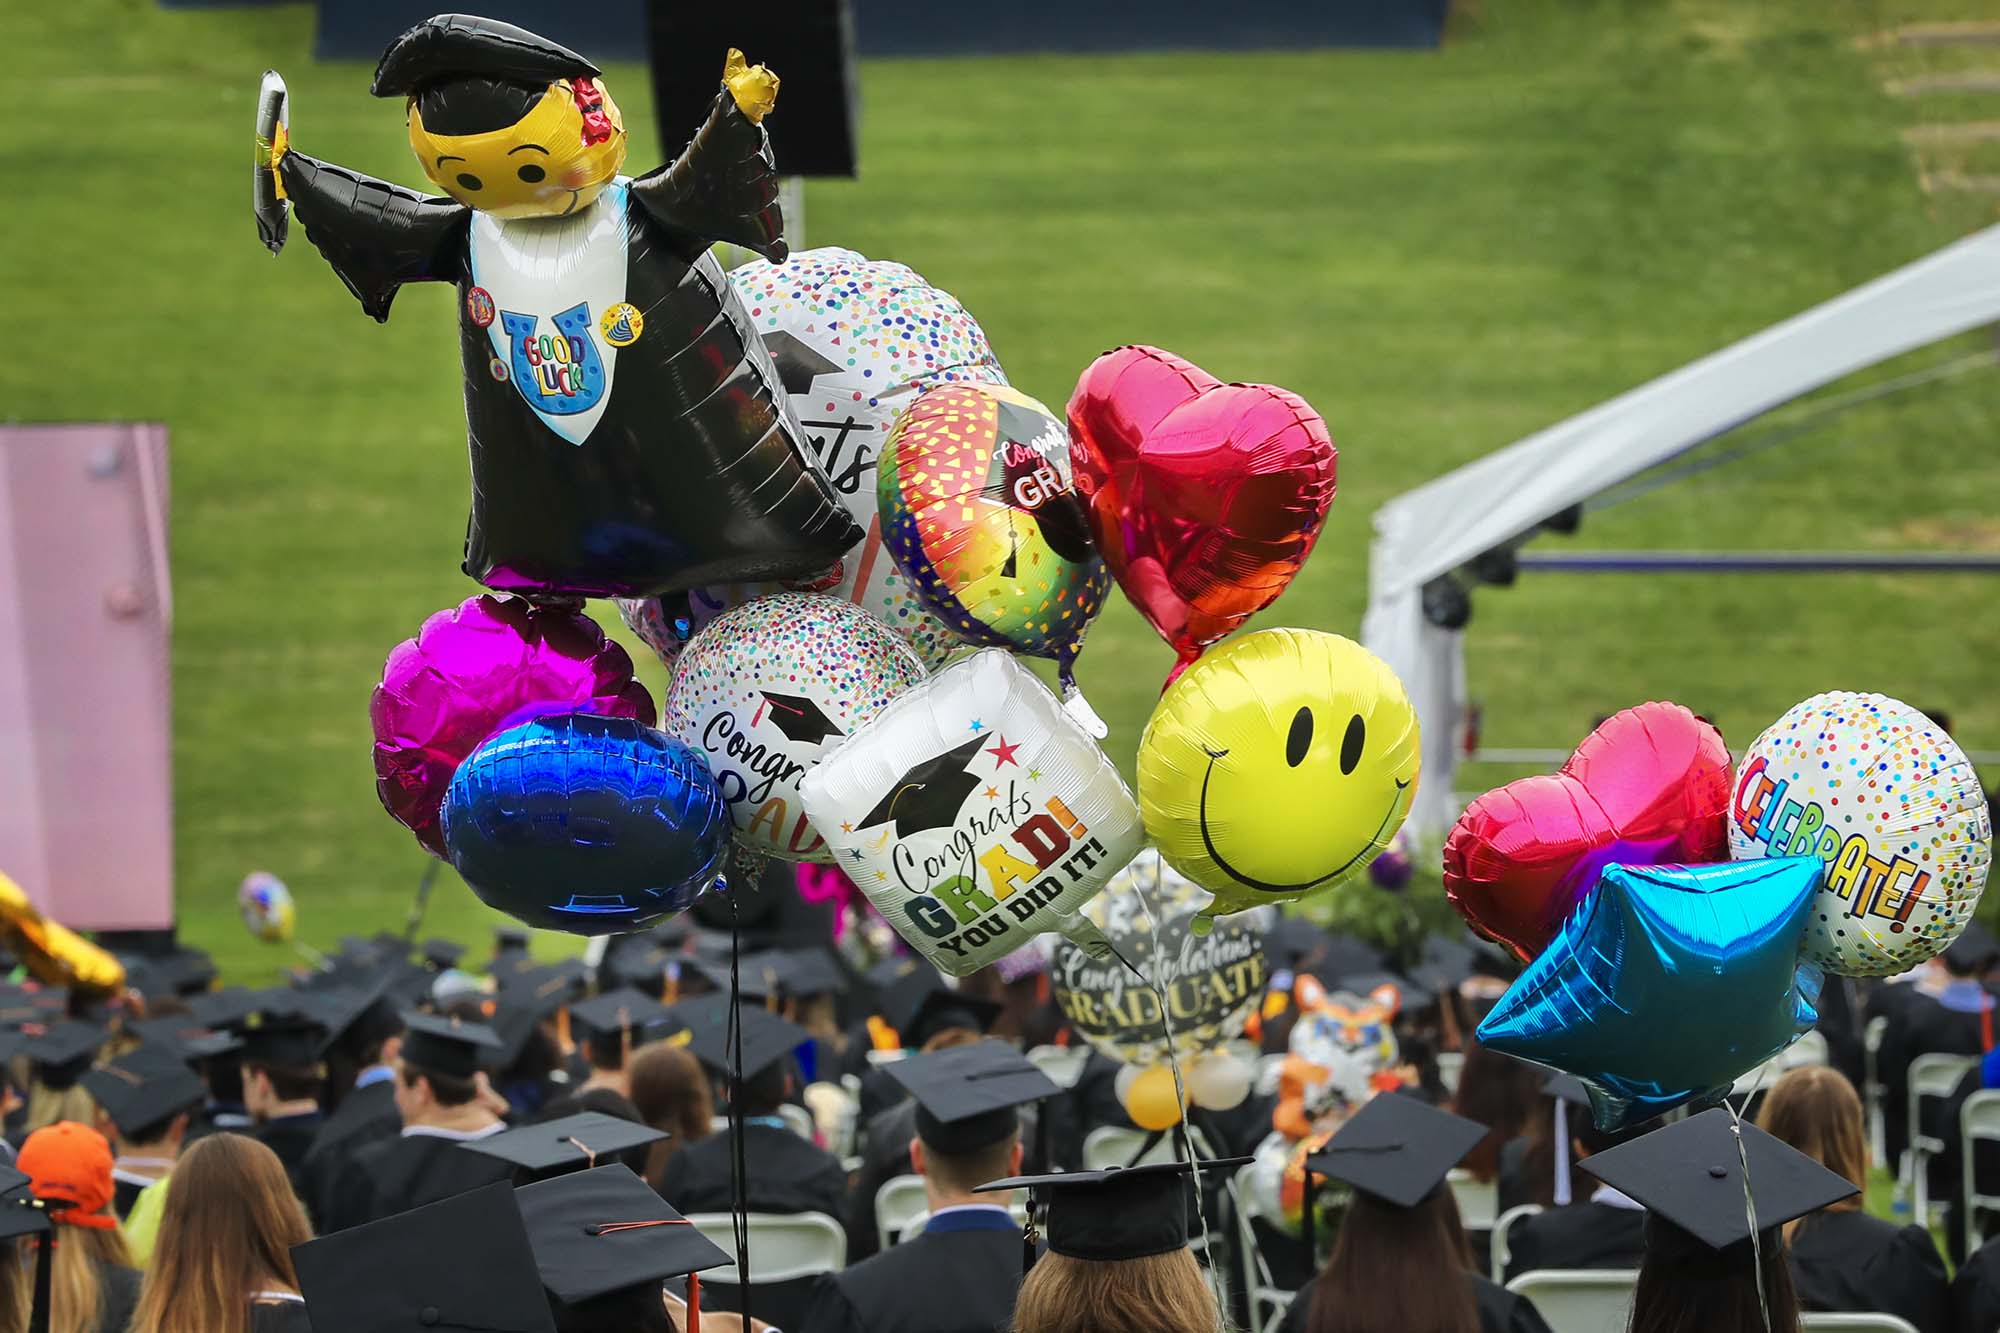 Graduates walking into final exercises carrying balloons